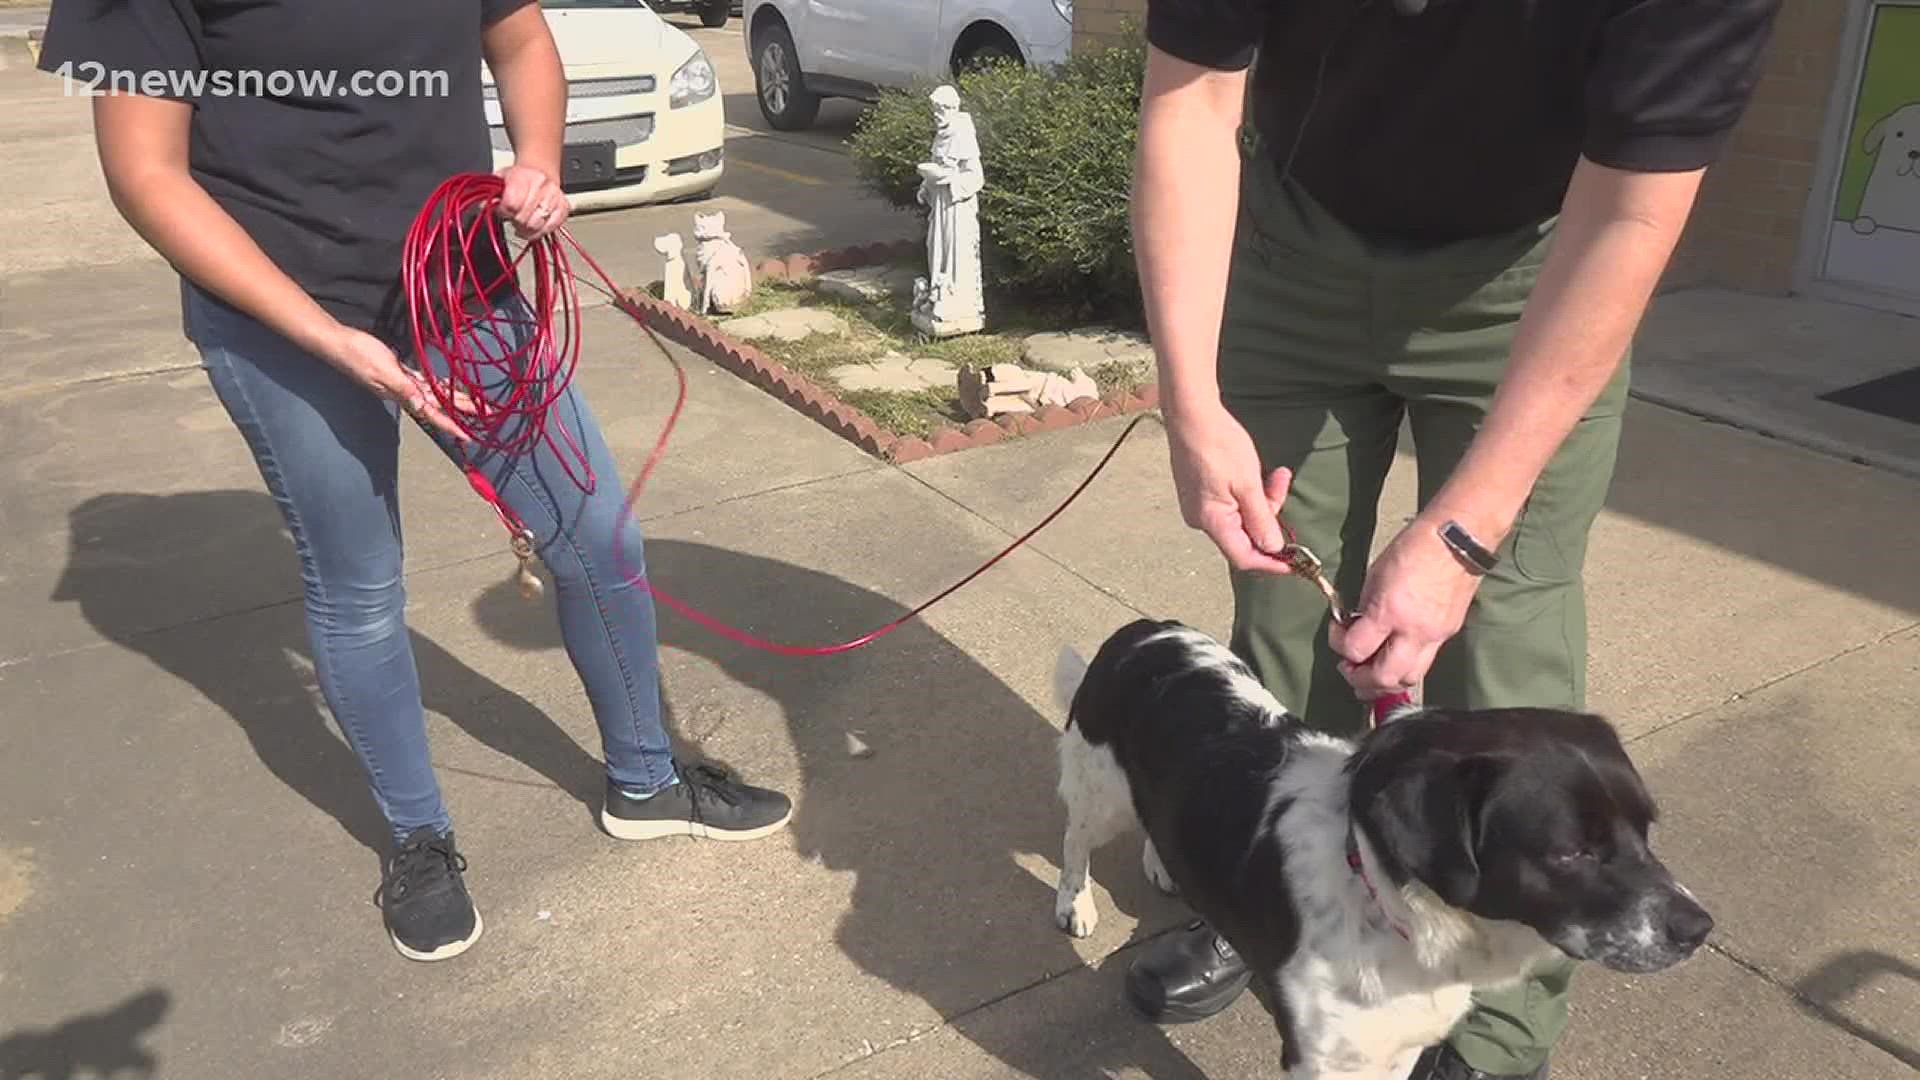 Texas outside dog leash laws take effect Jan. 18, 2022 